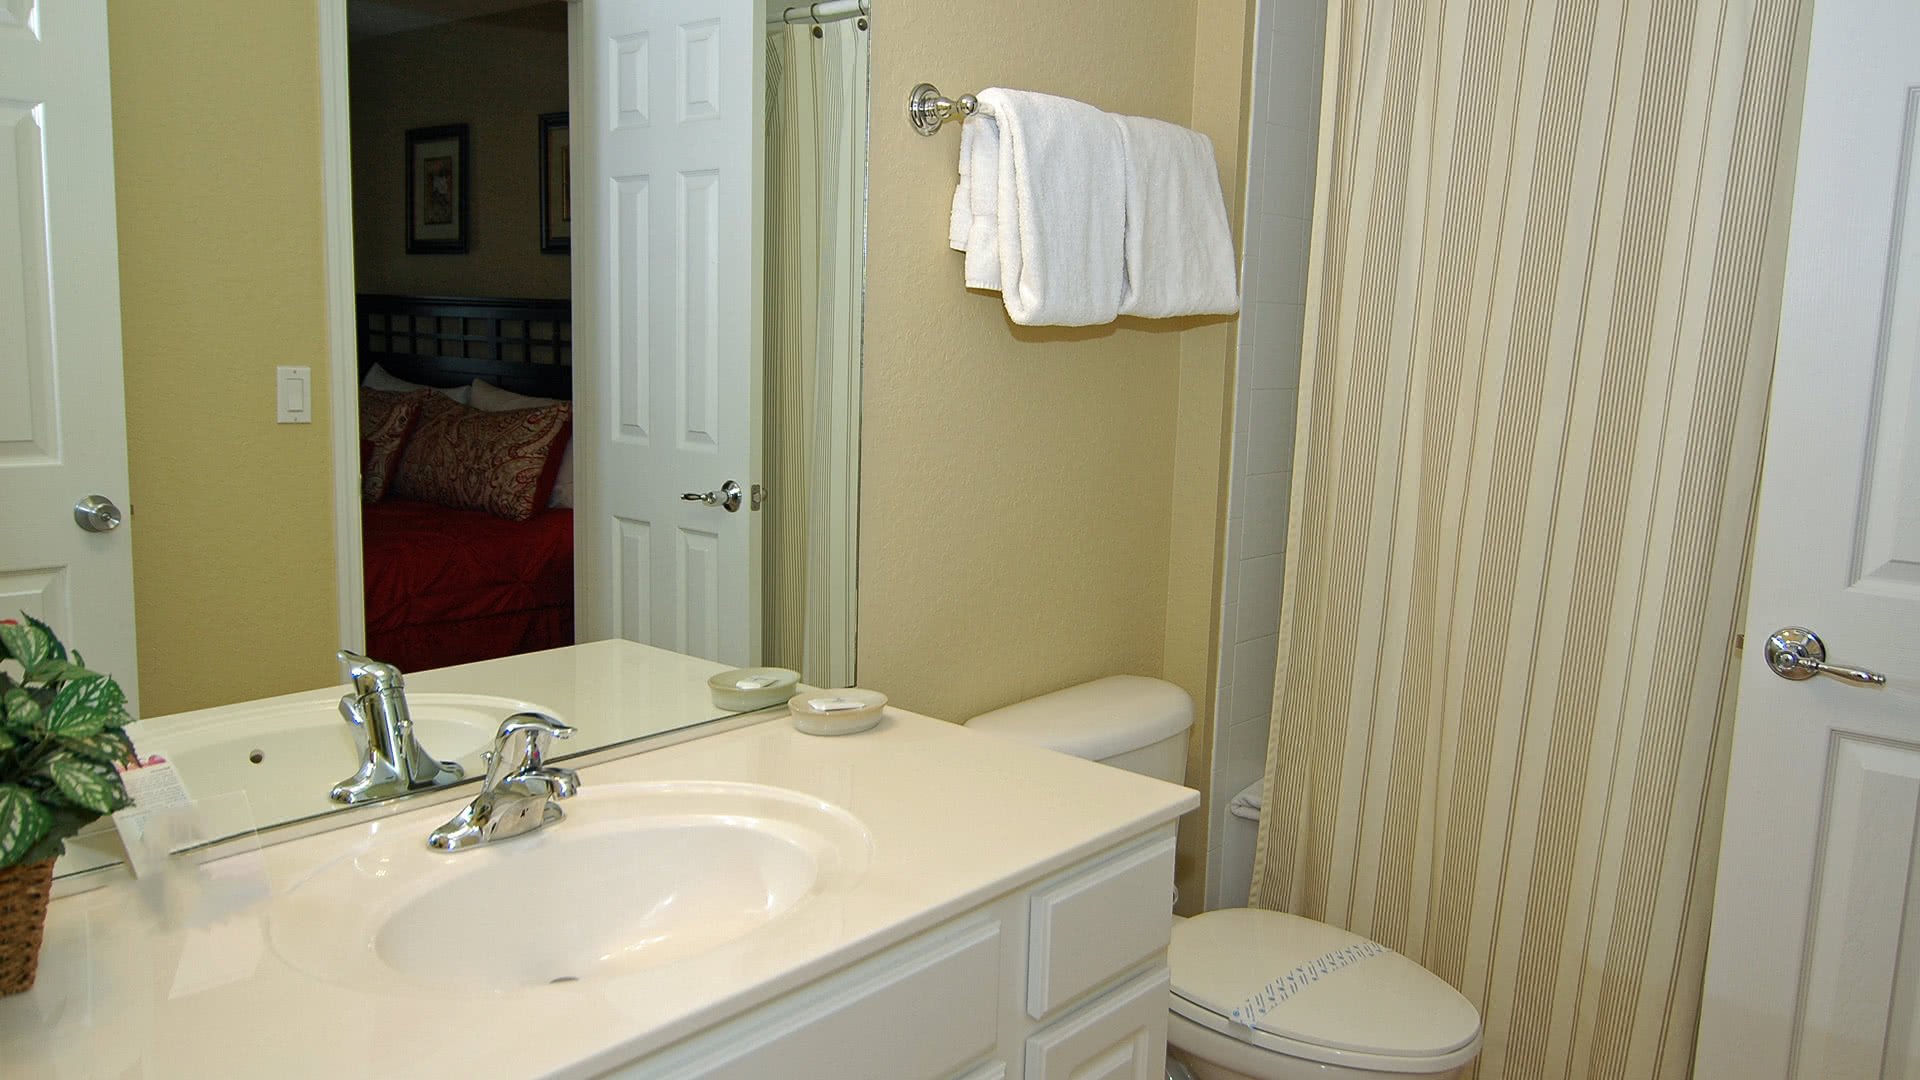 King Suite Bathroom 3
Tub/Shower Combo